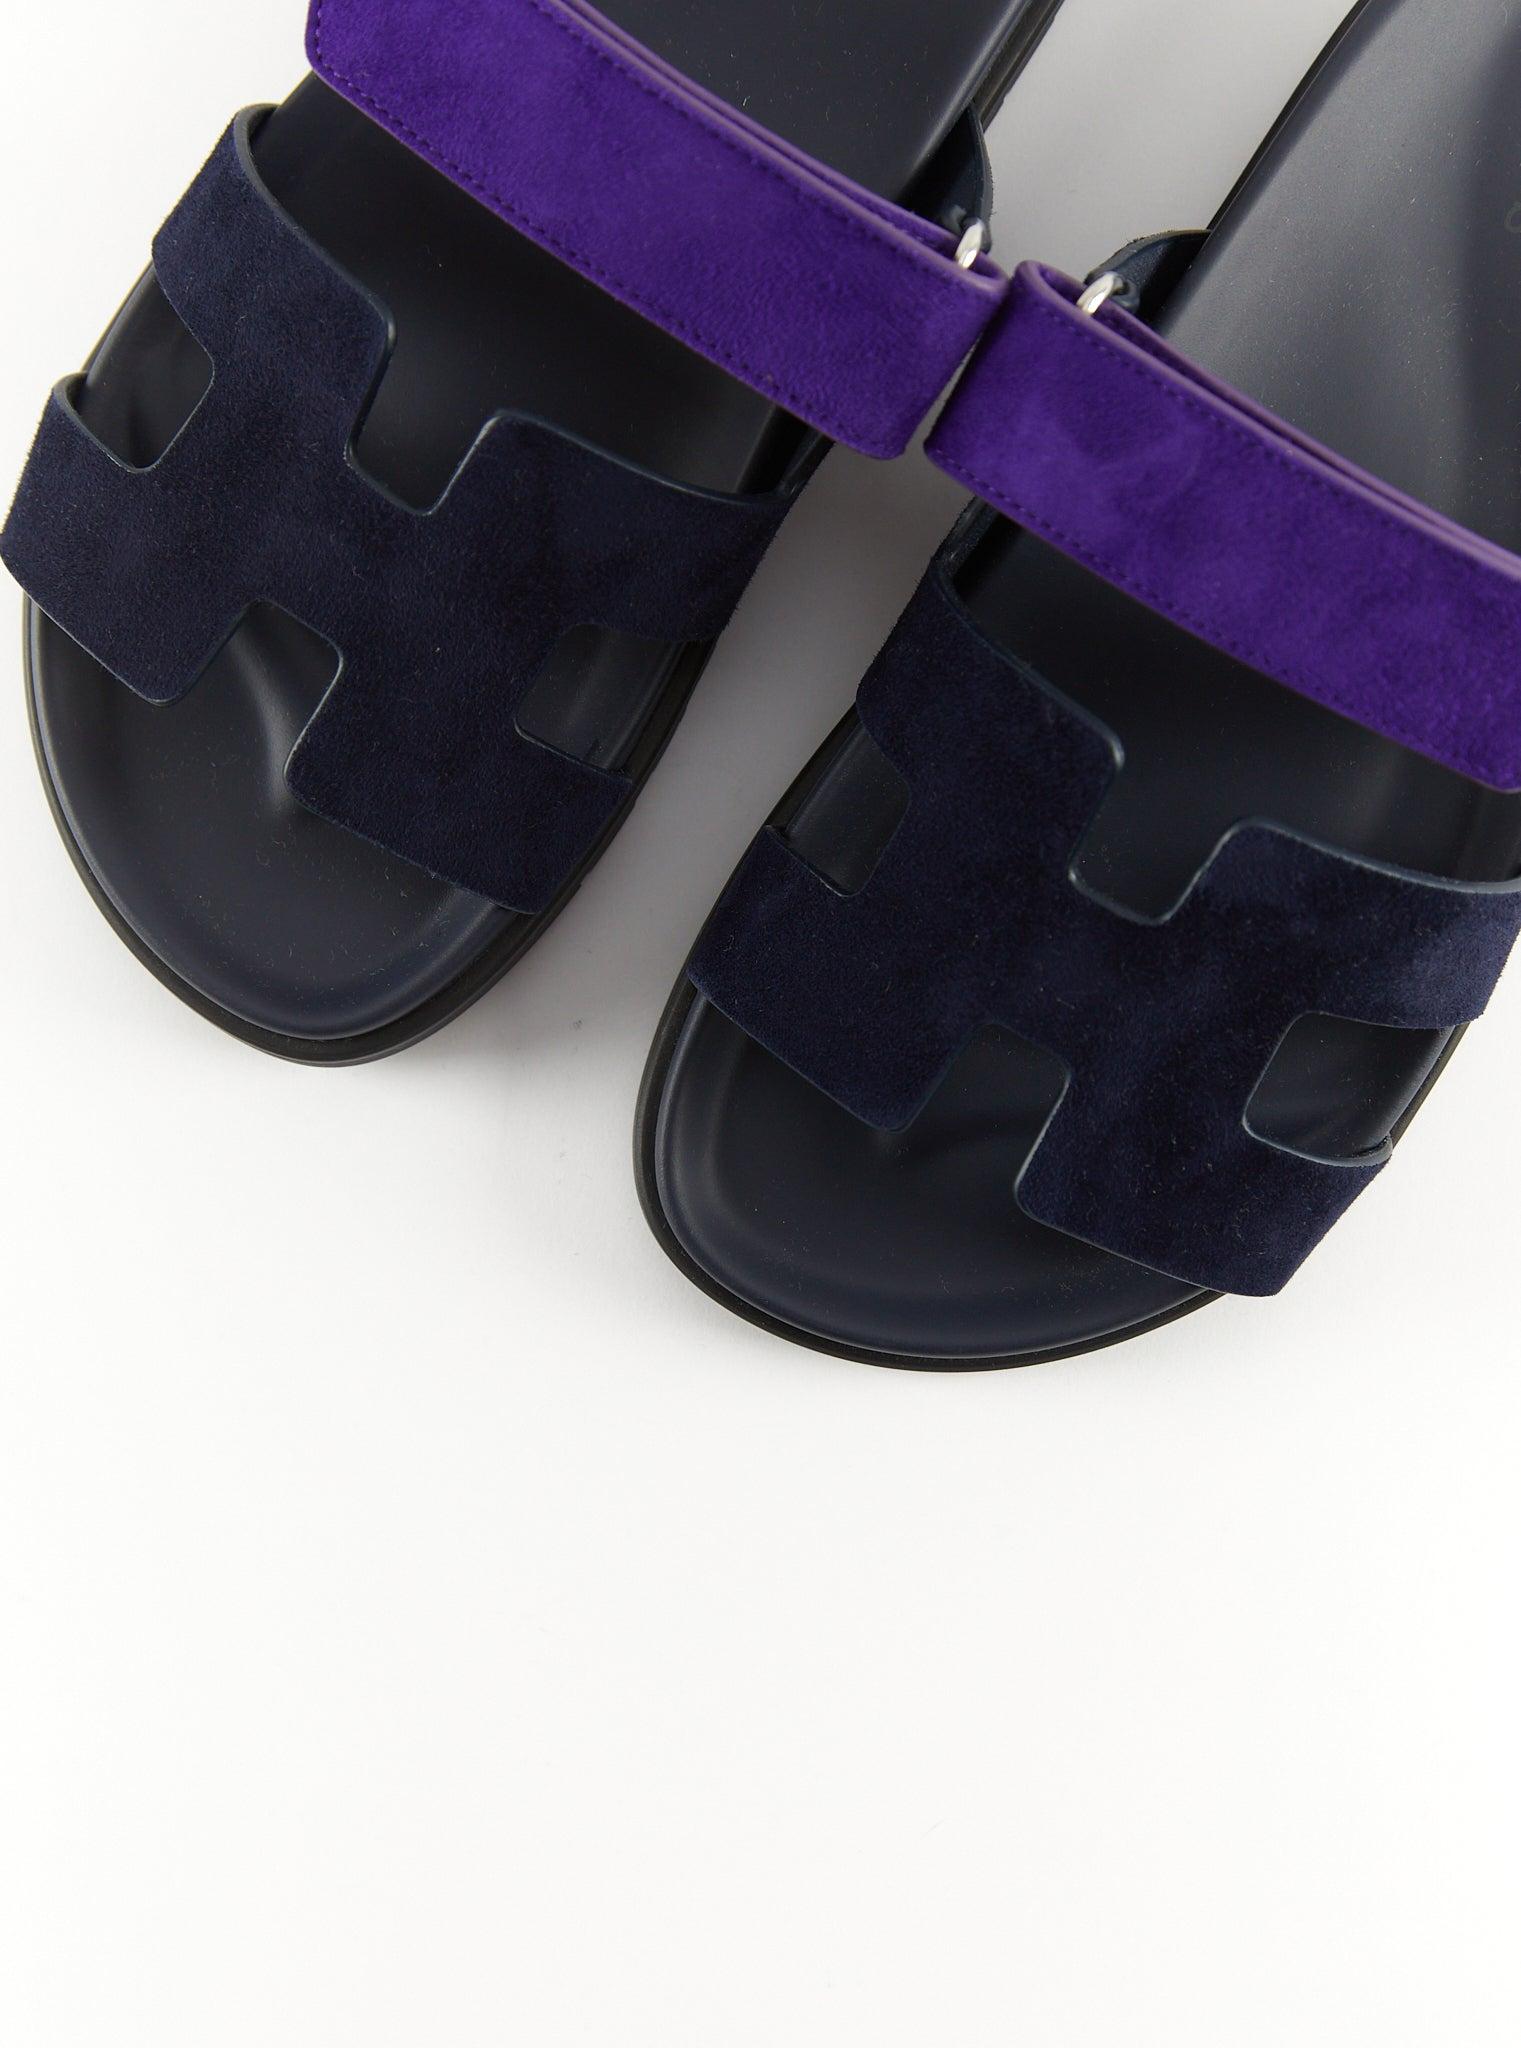 HERMÈS CHYPRE SANDAL Violet Fonce & Majorette - Size 37.5 In Excellent Condition For Sale In London, GB